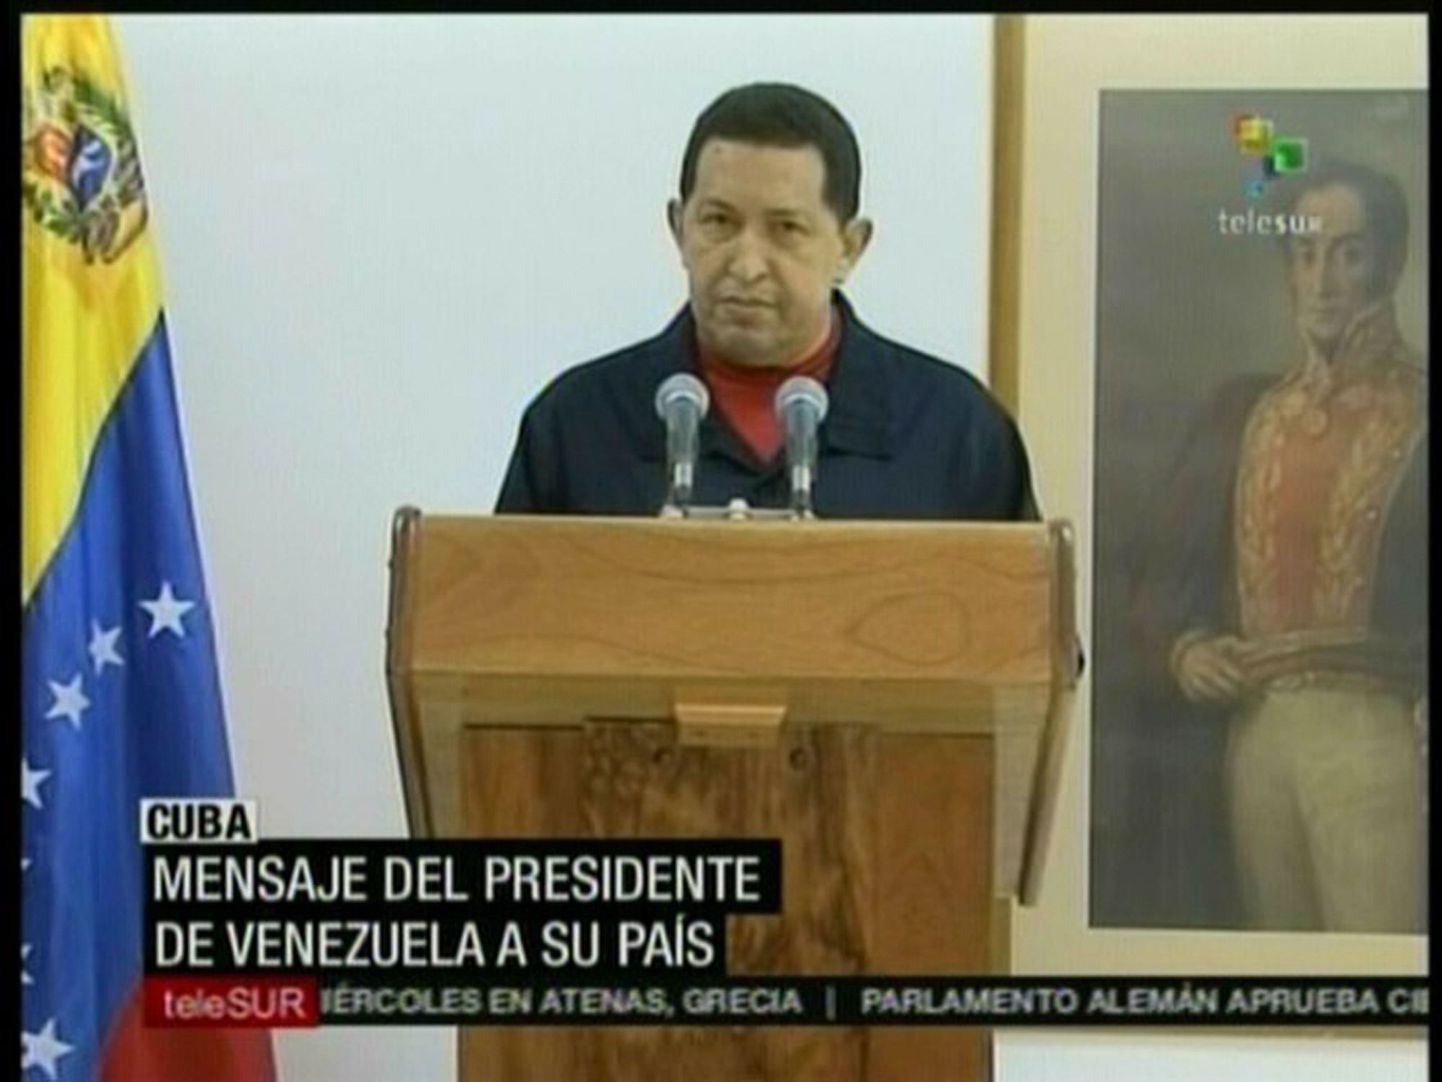 Venezuela president Hugo Chavez teatas eile, et sai Kuubal vähiravi